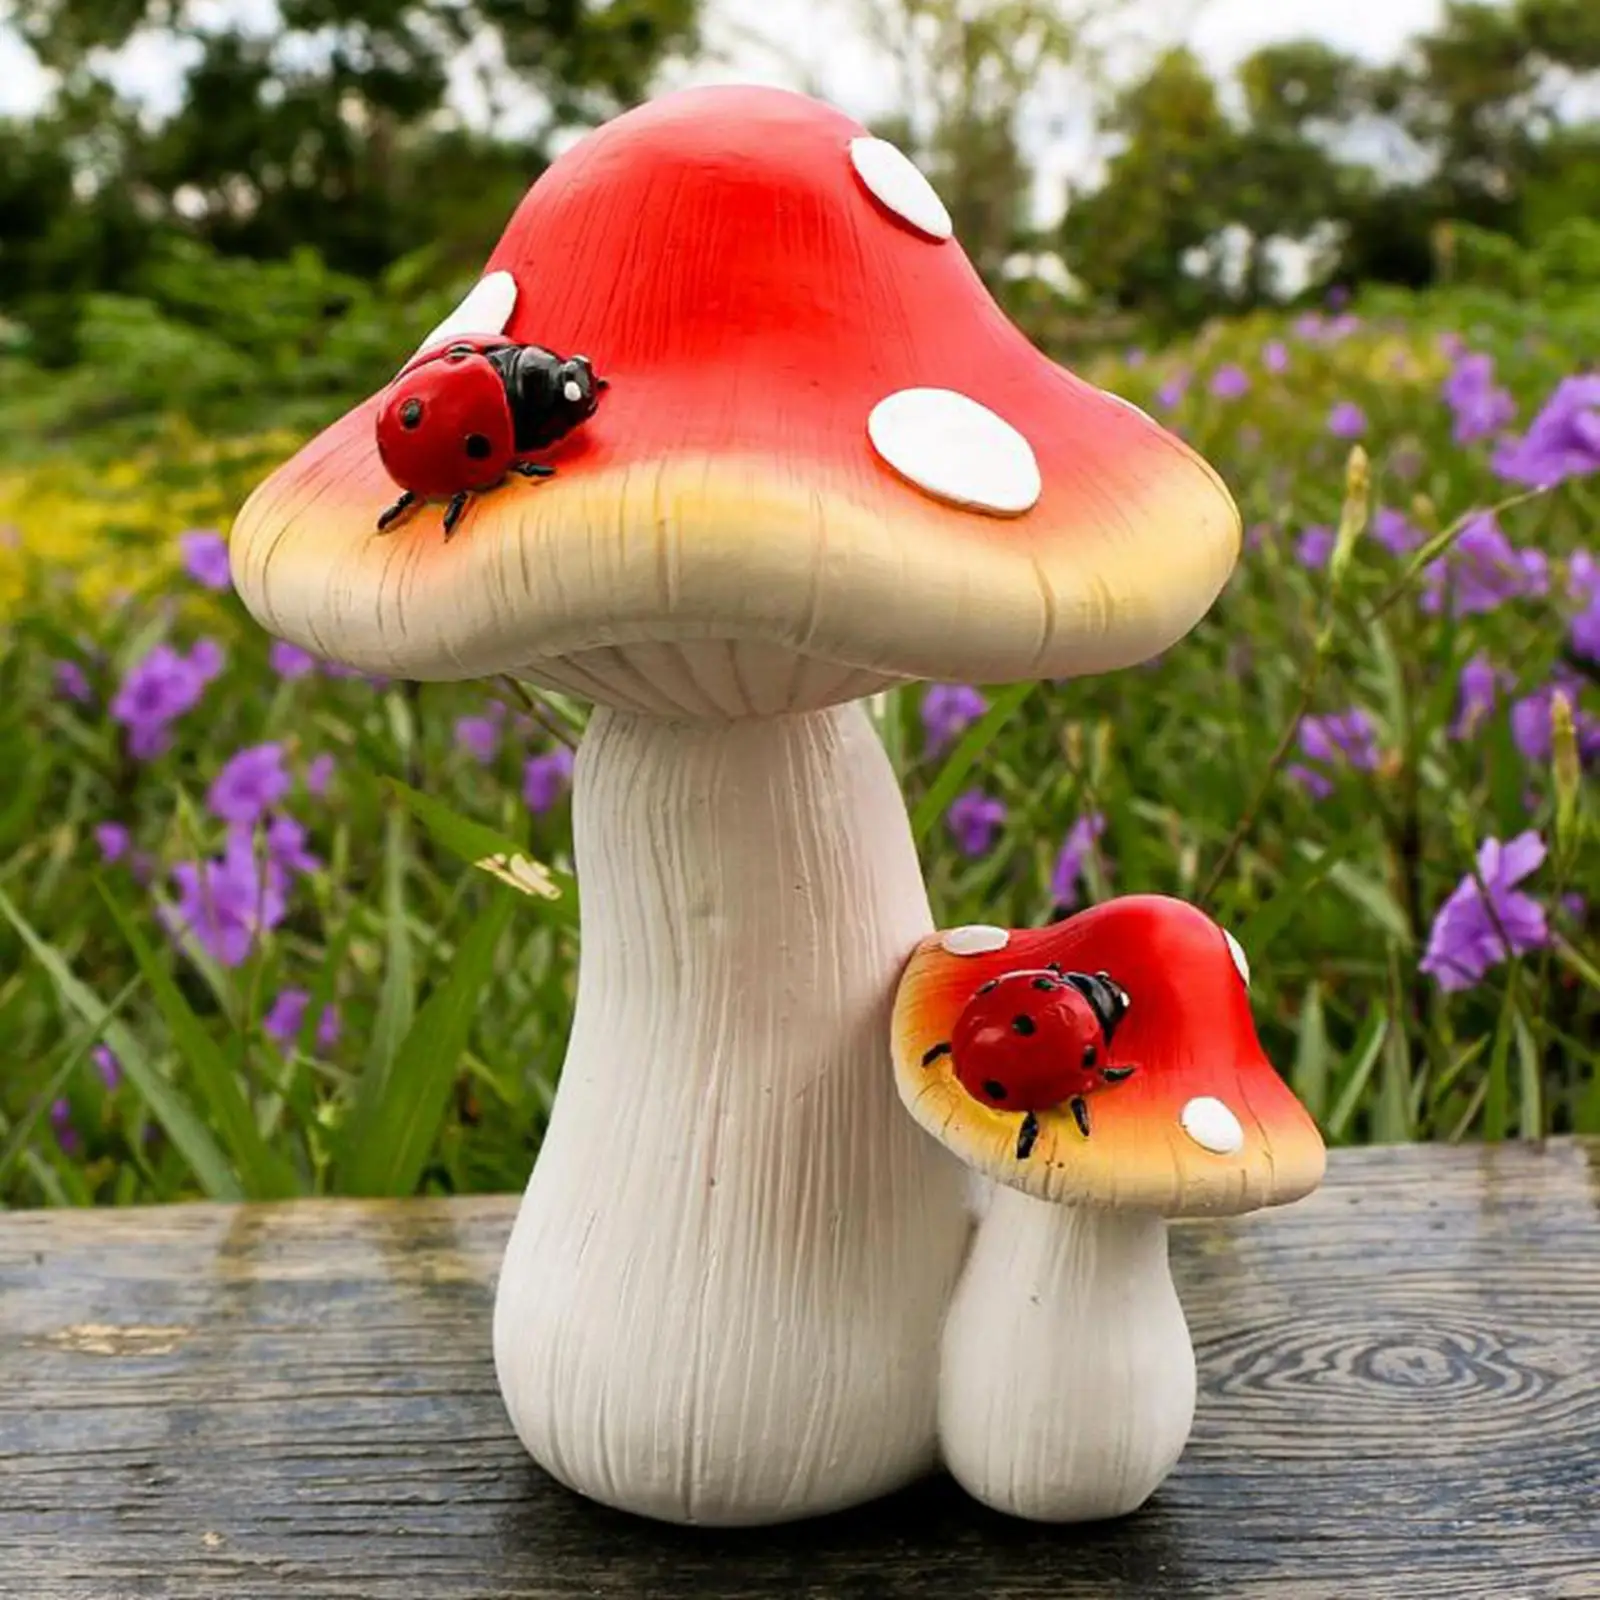  Mushroom Statue, Mushroom Figurines Mushroom Sculpture Art Crafts for Patio Lawn Courtyard Ornament Decoration